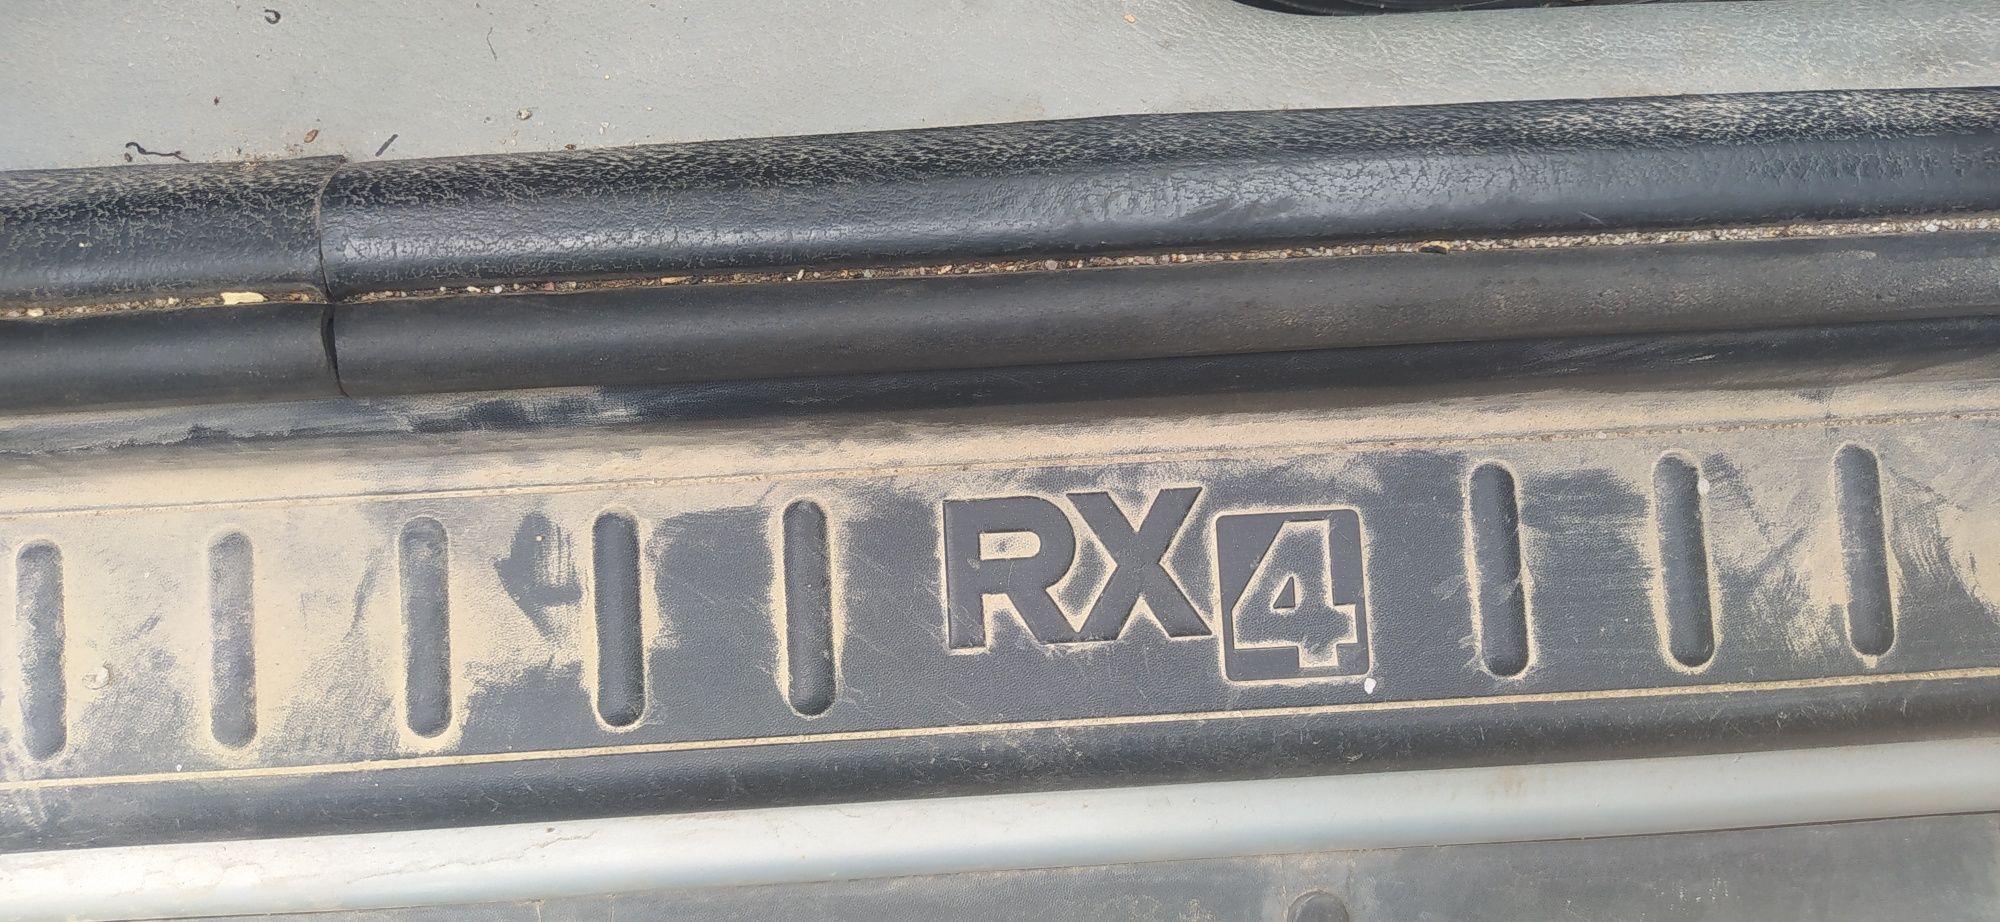 Renault Scenic RX4